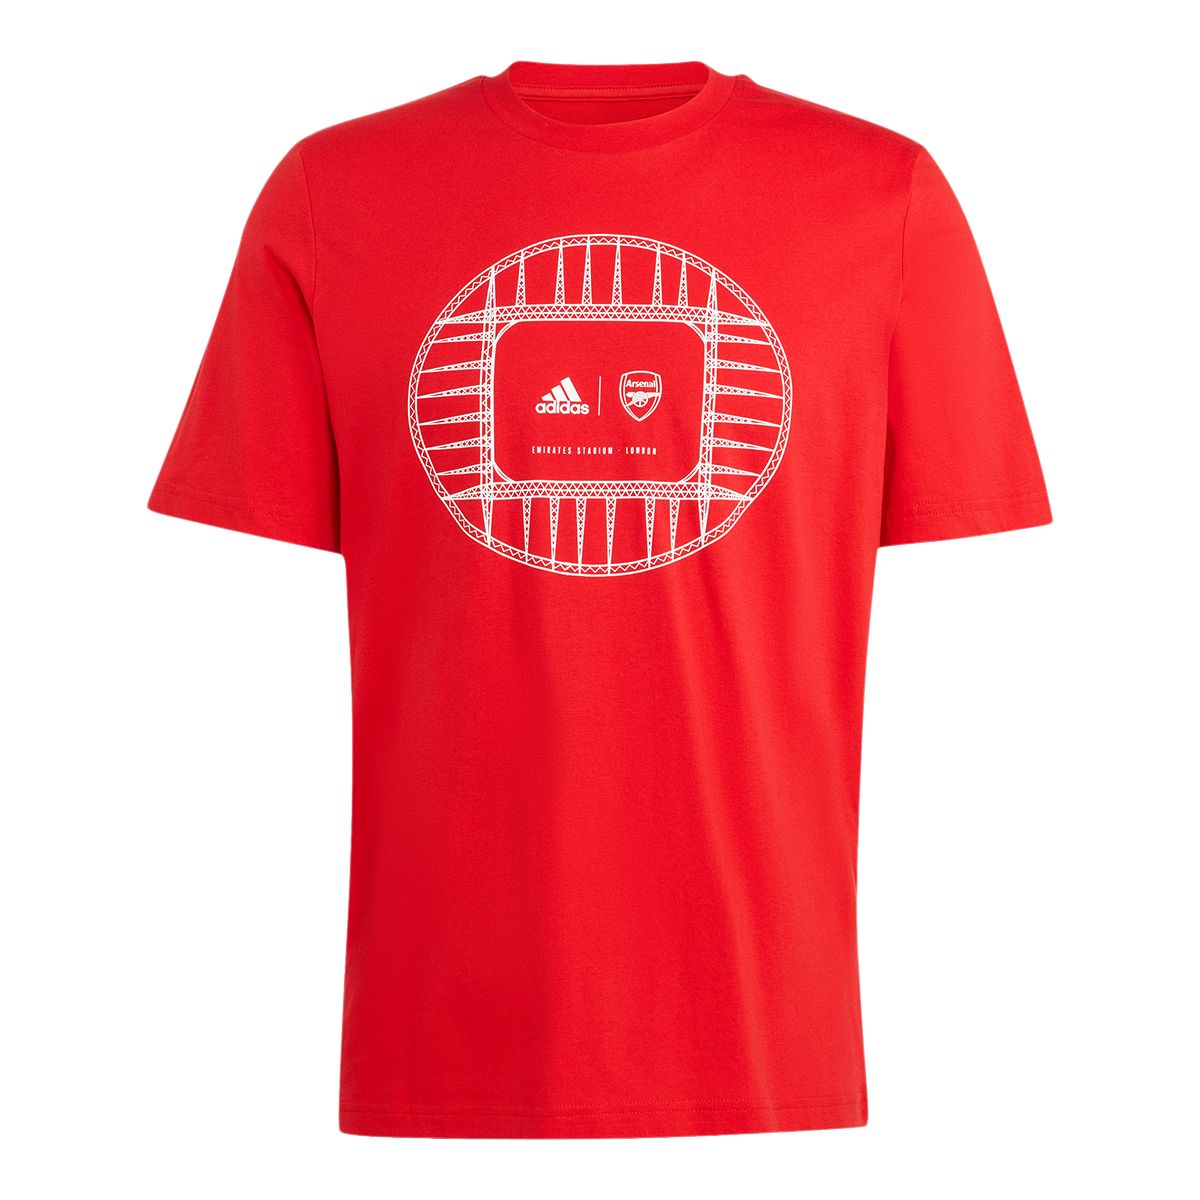 Image of Arsenal F.c. adidas Graphic T Shirt